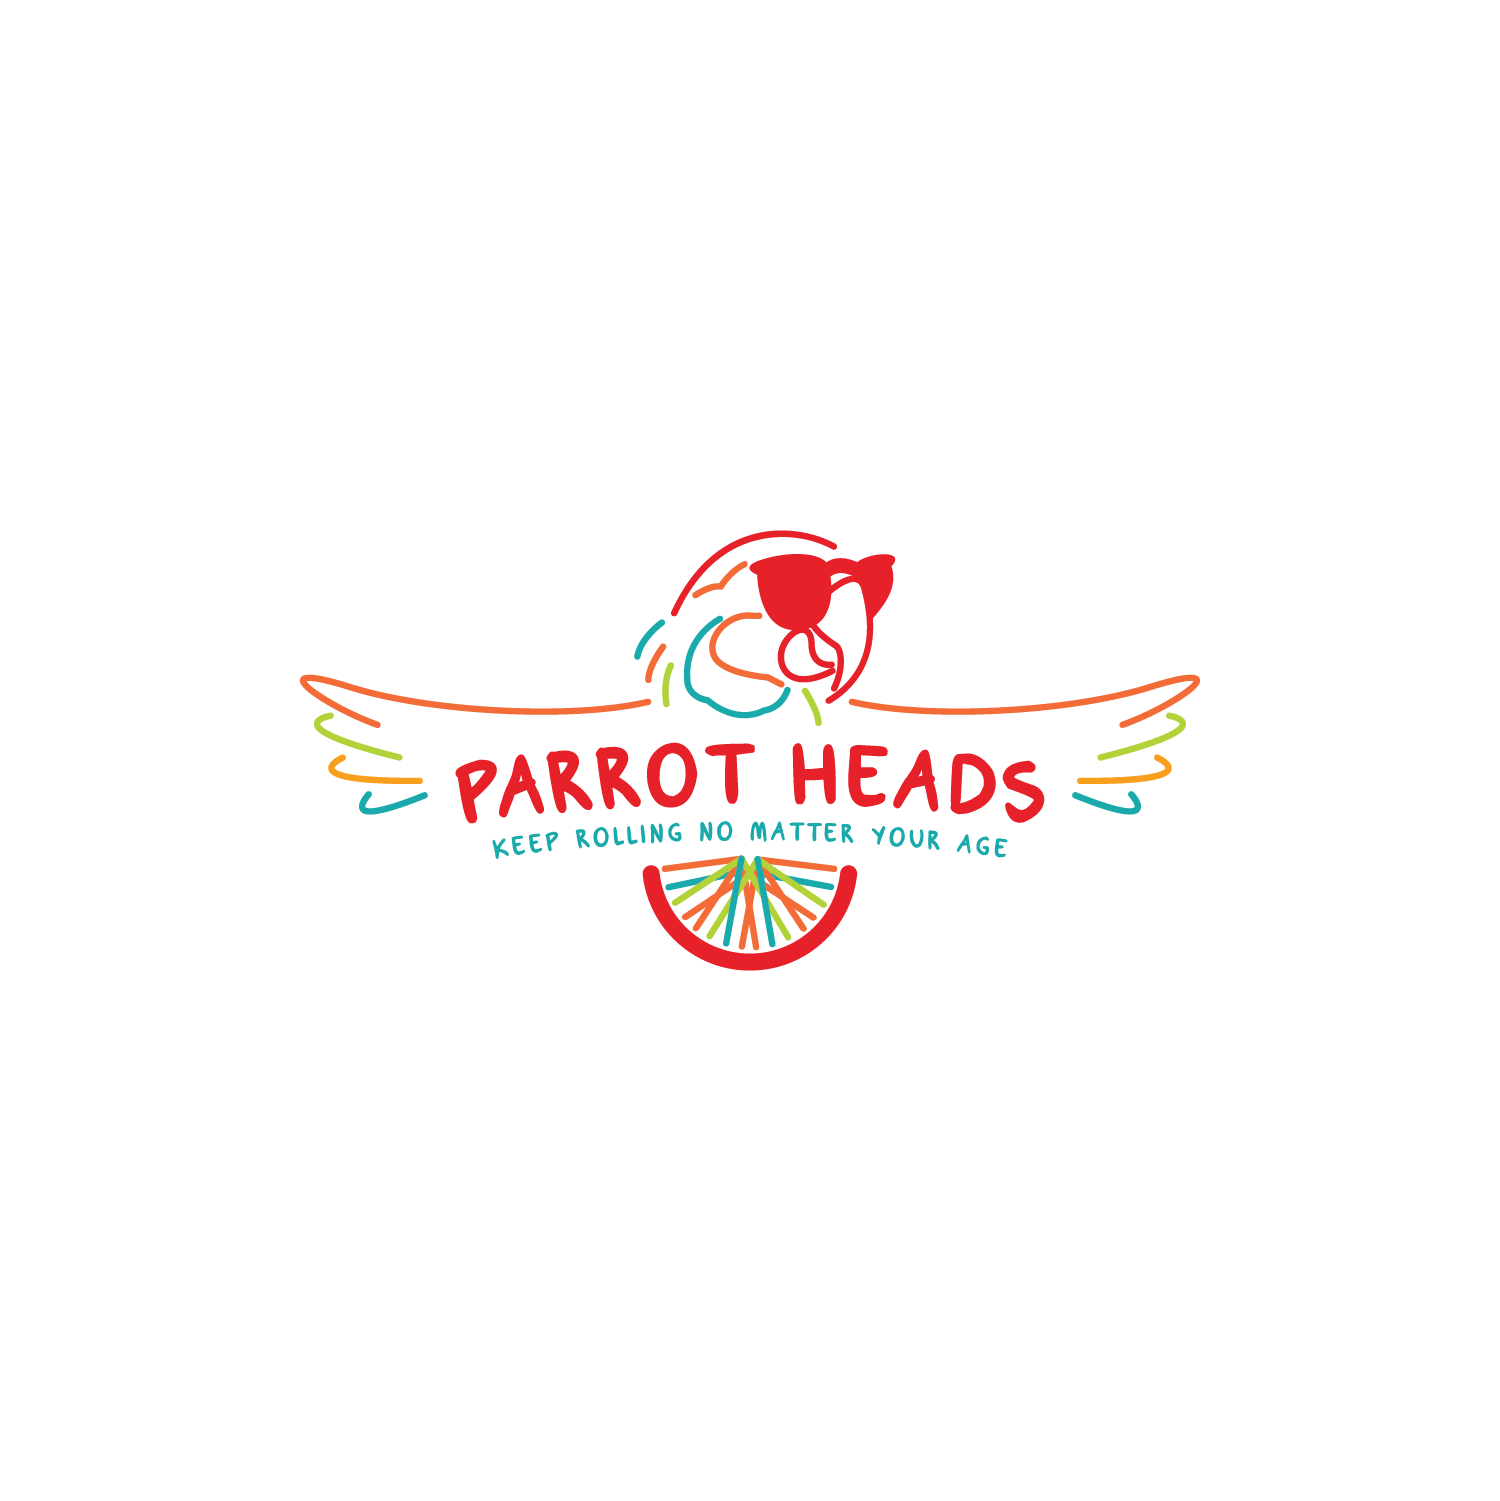 Parrot Heads Bike Club logo by OLSON MCINTYRE